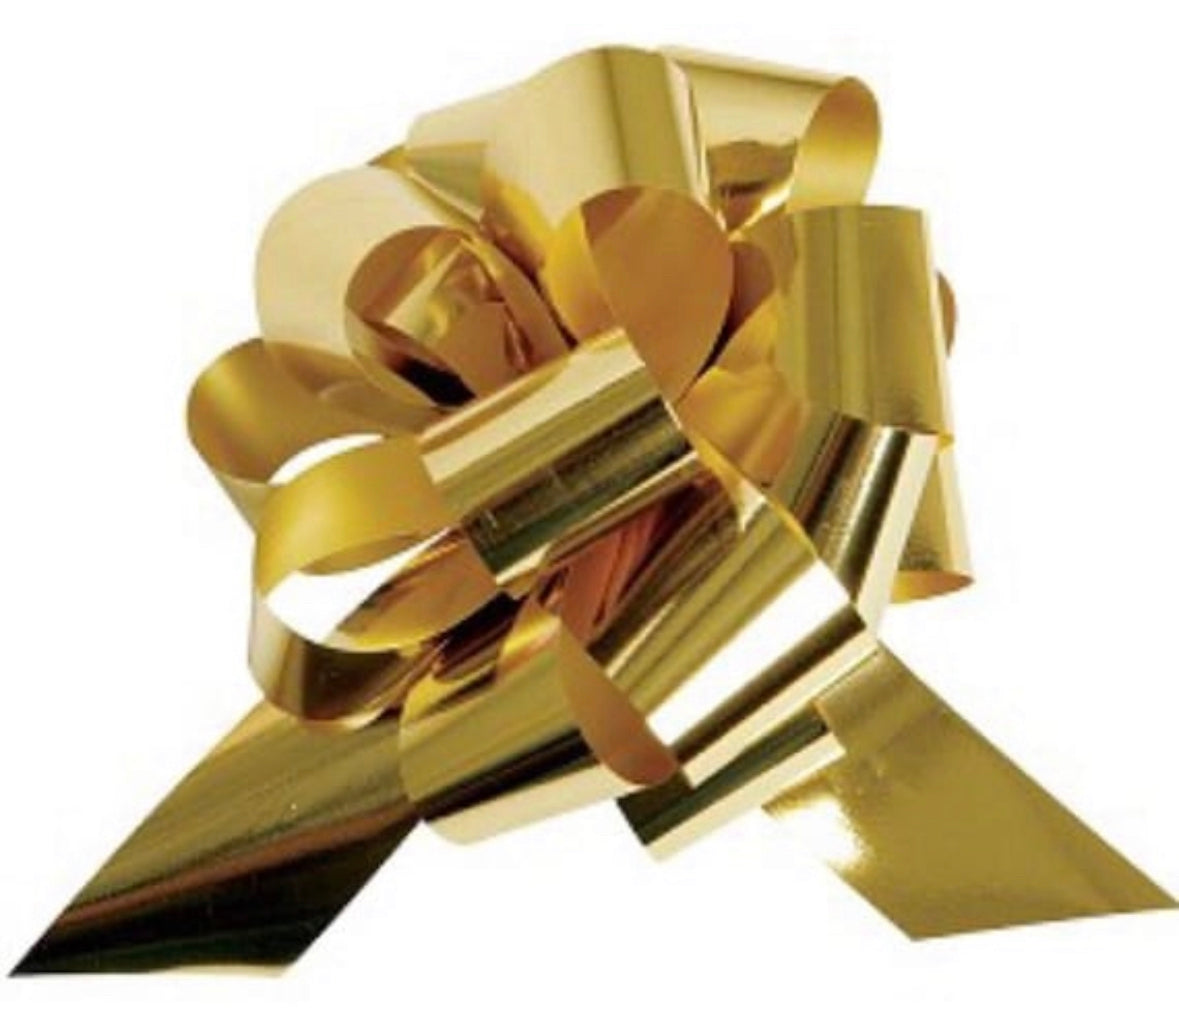 Black & Gold dot - Florist Cellophane & Gold Metallic Pull Bow